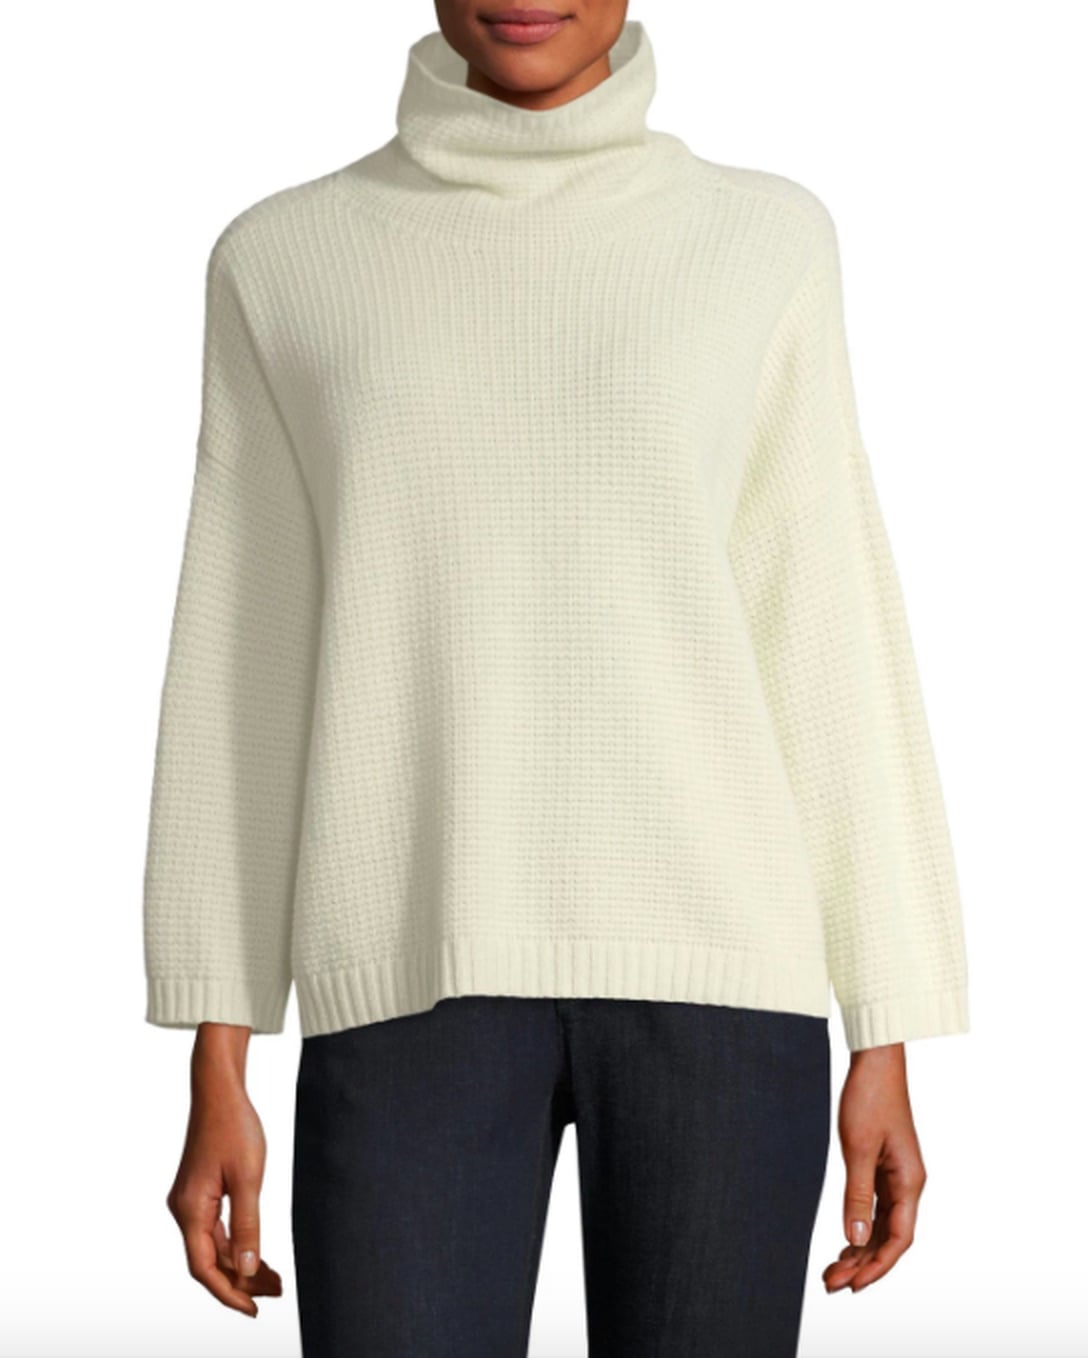 Meghan Markle AllSaints Sweater | POPSUGAR Fashion